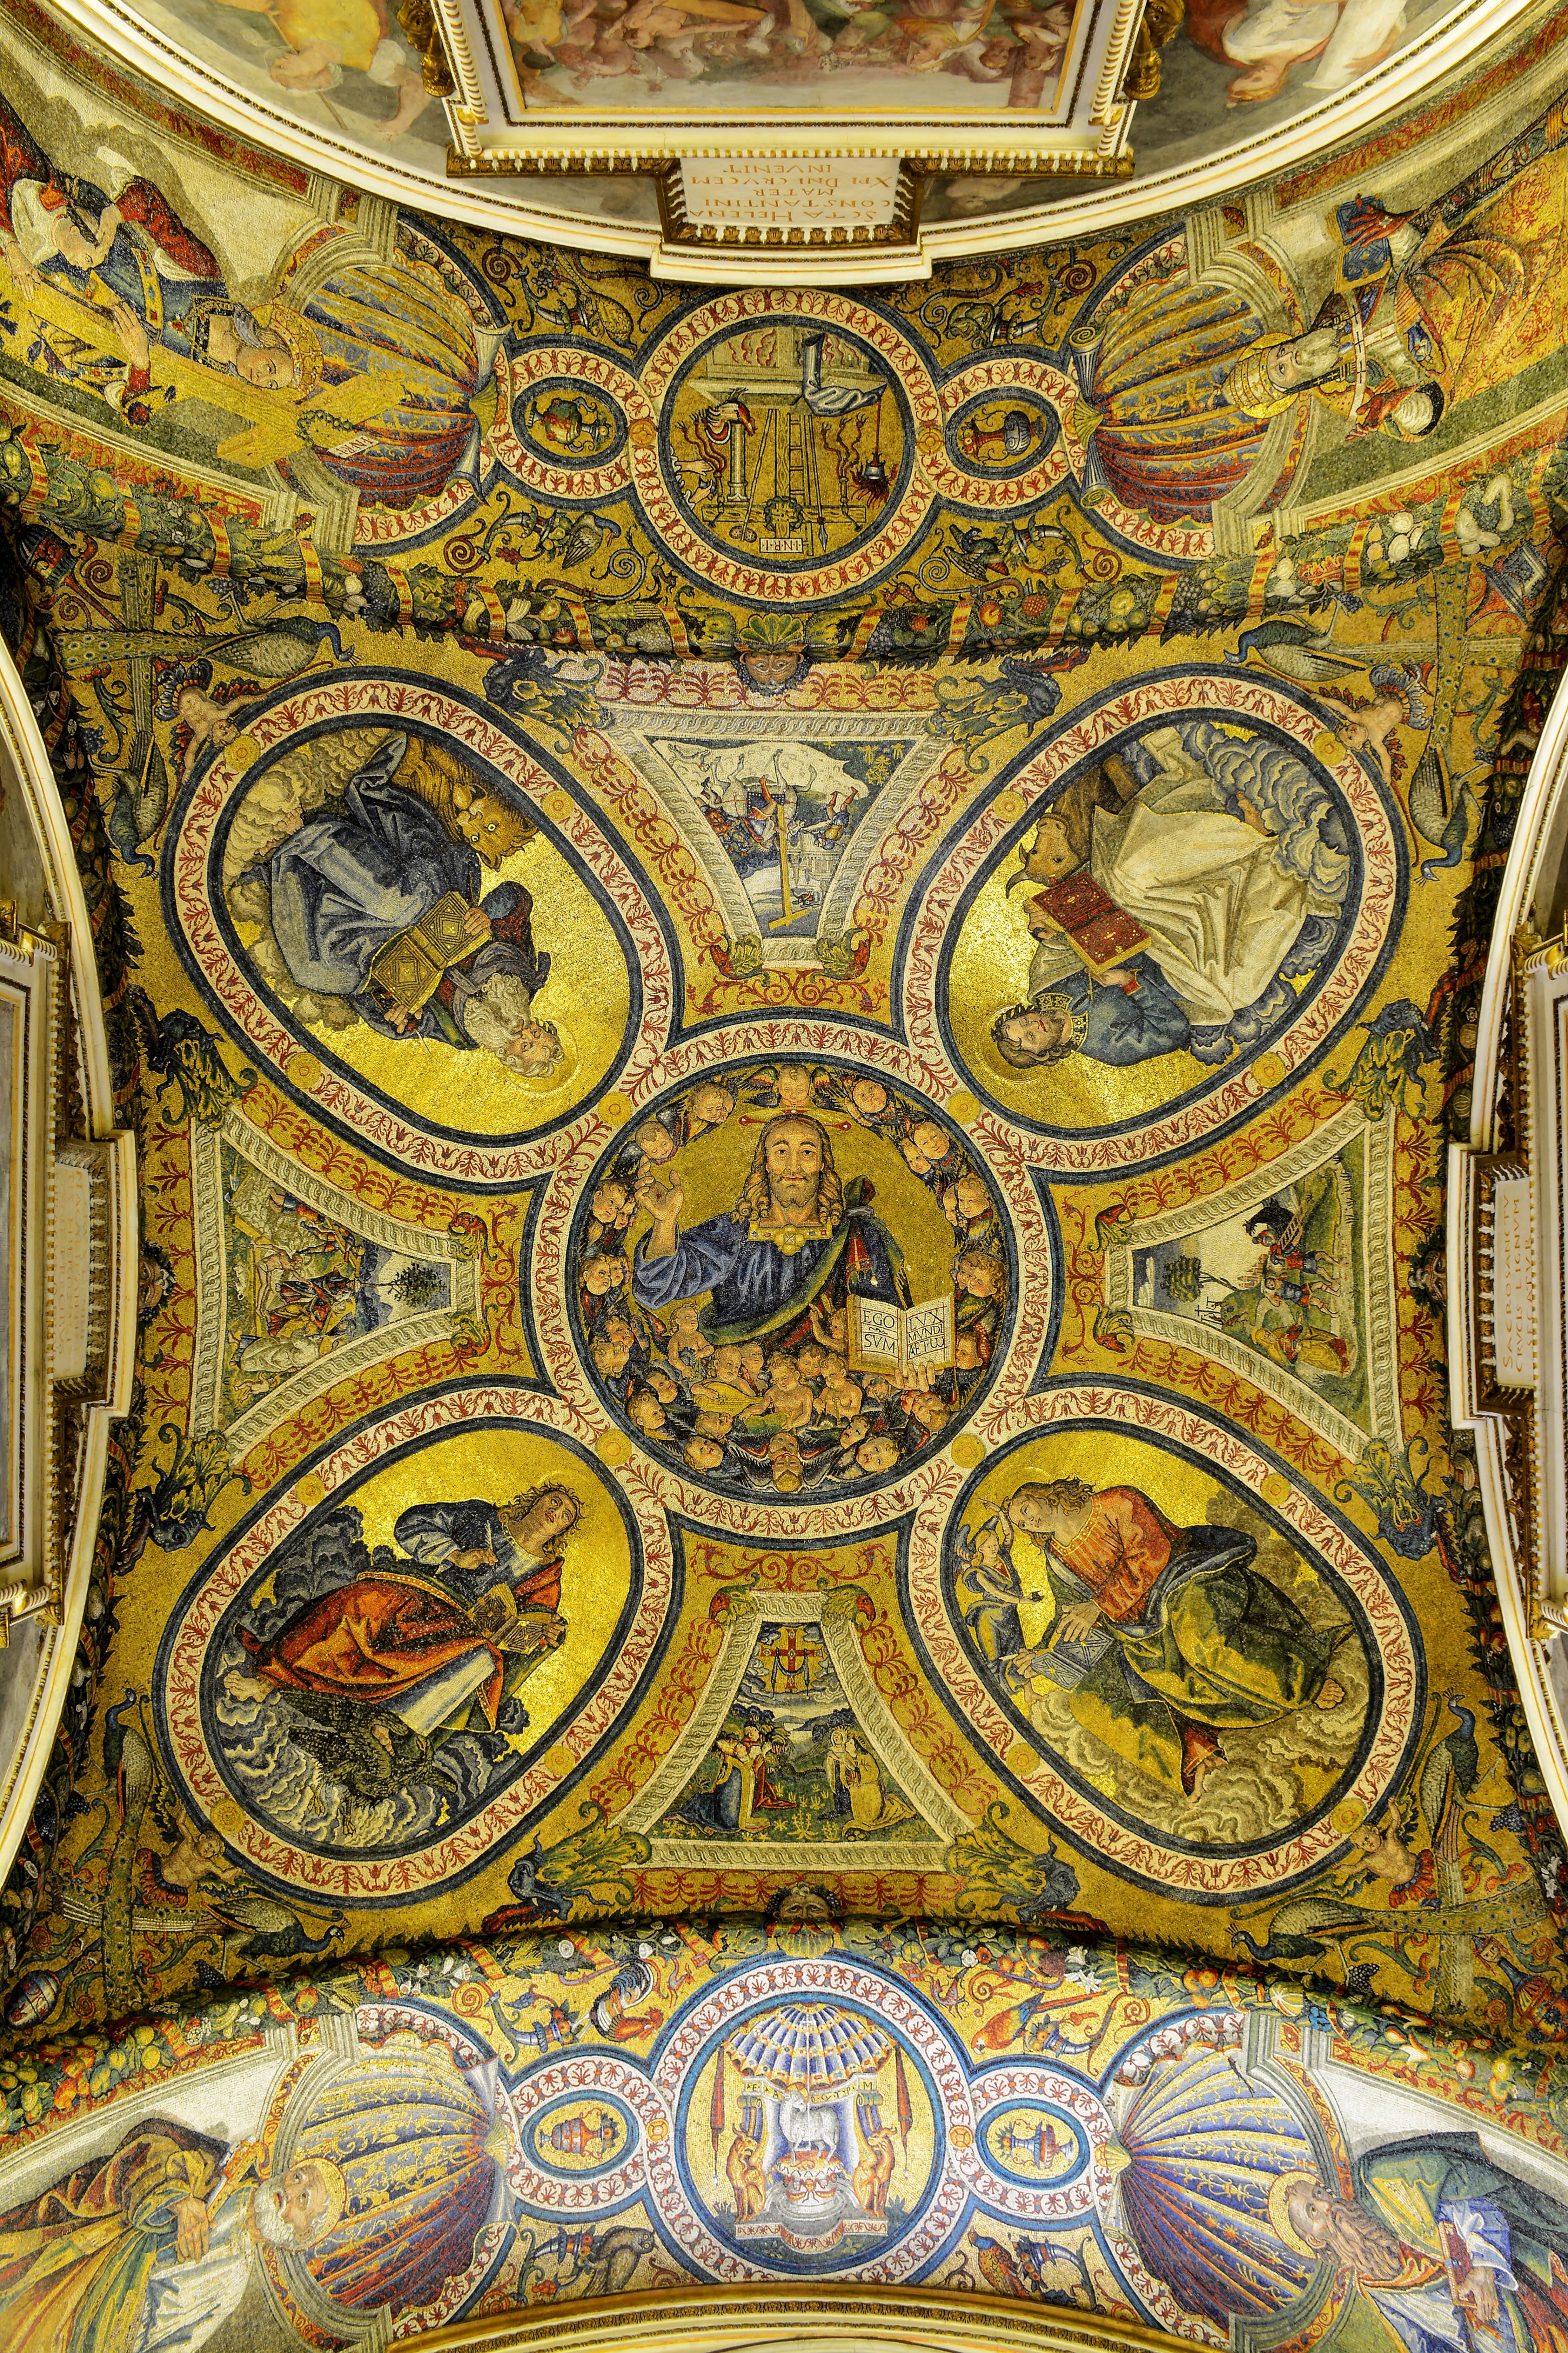 Mosaic of Santa Croce in Gerusalemme (Rome)